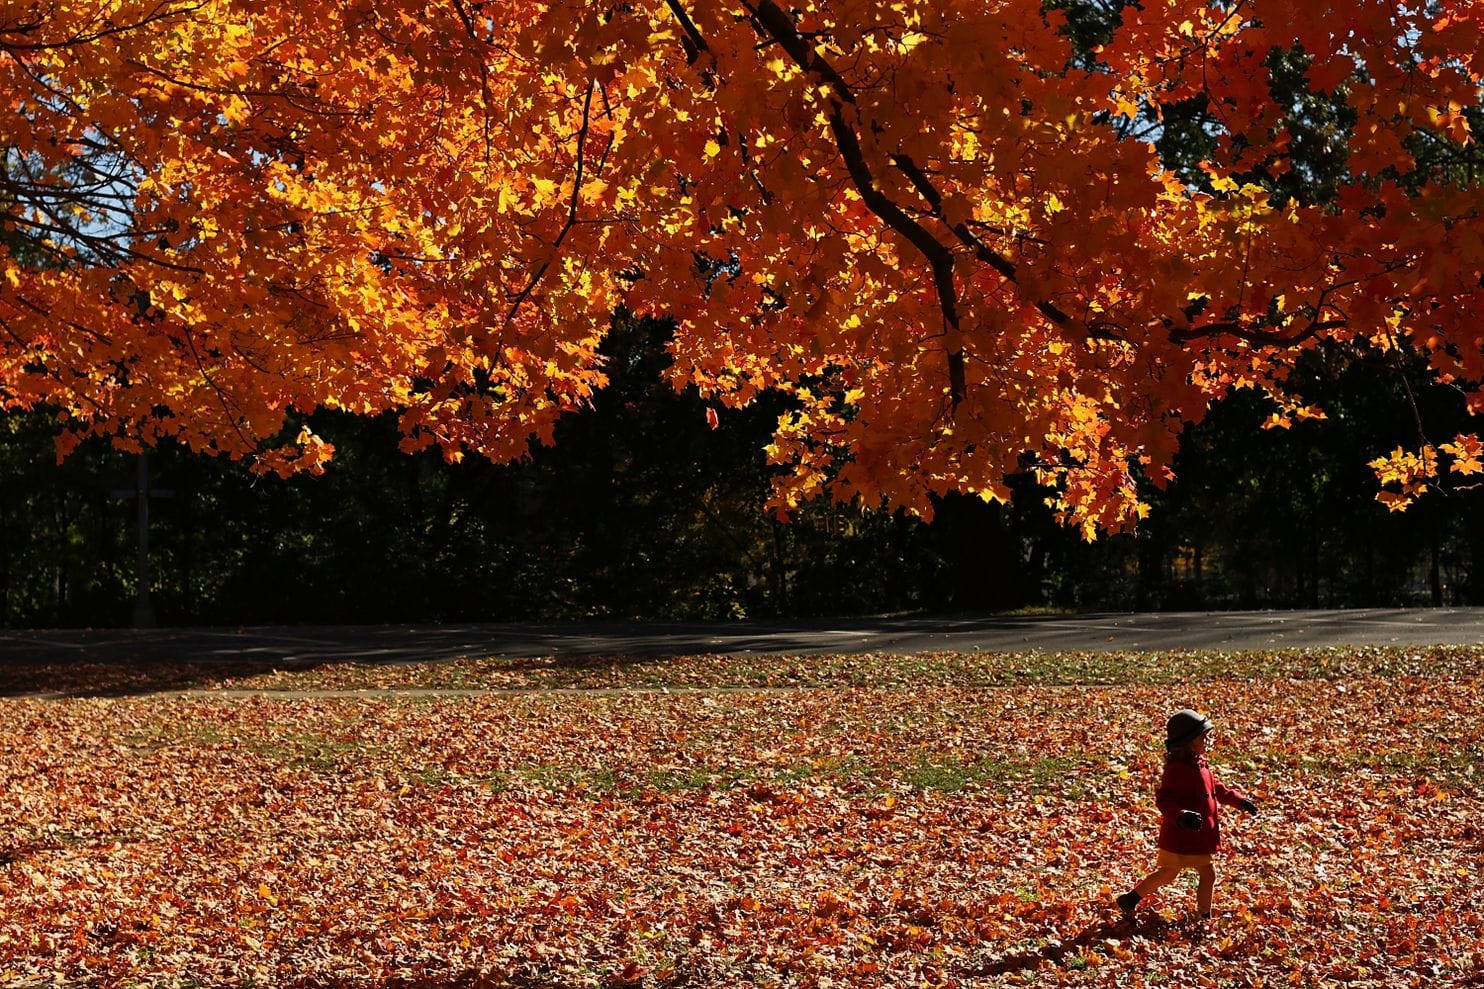 The scent of a season: Explaining the aromas of fall | The Washington Post